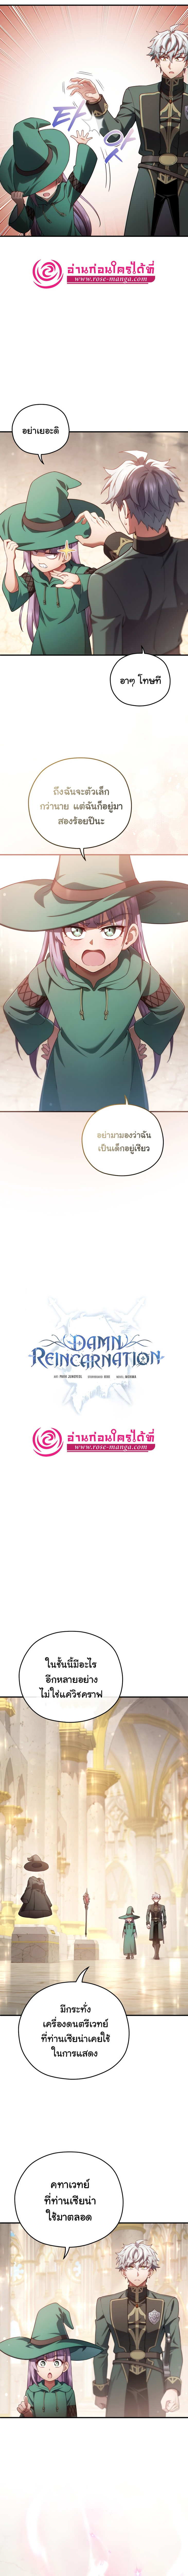 Damn-Reincarnation-39-3.jpg